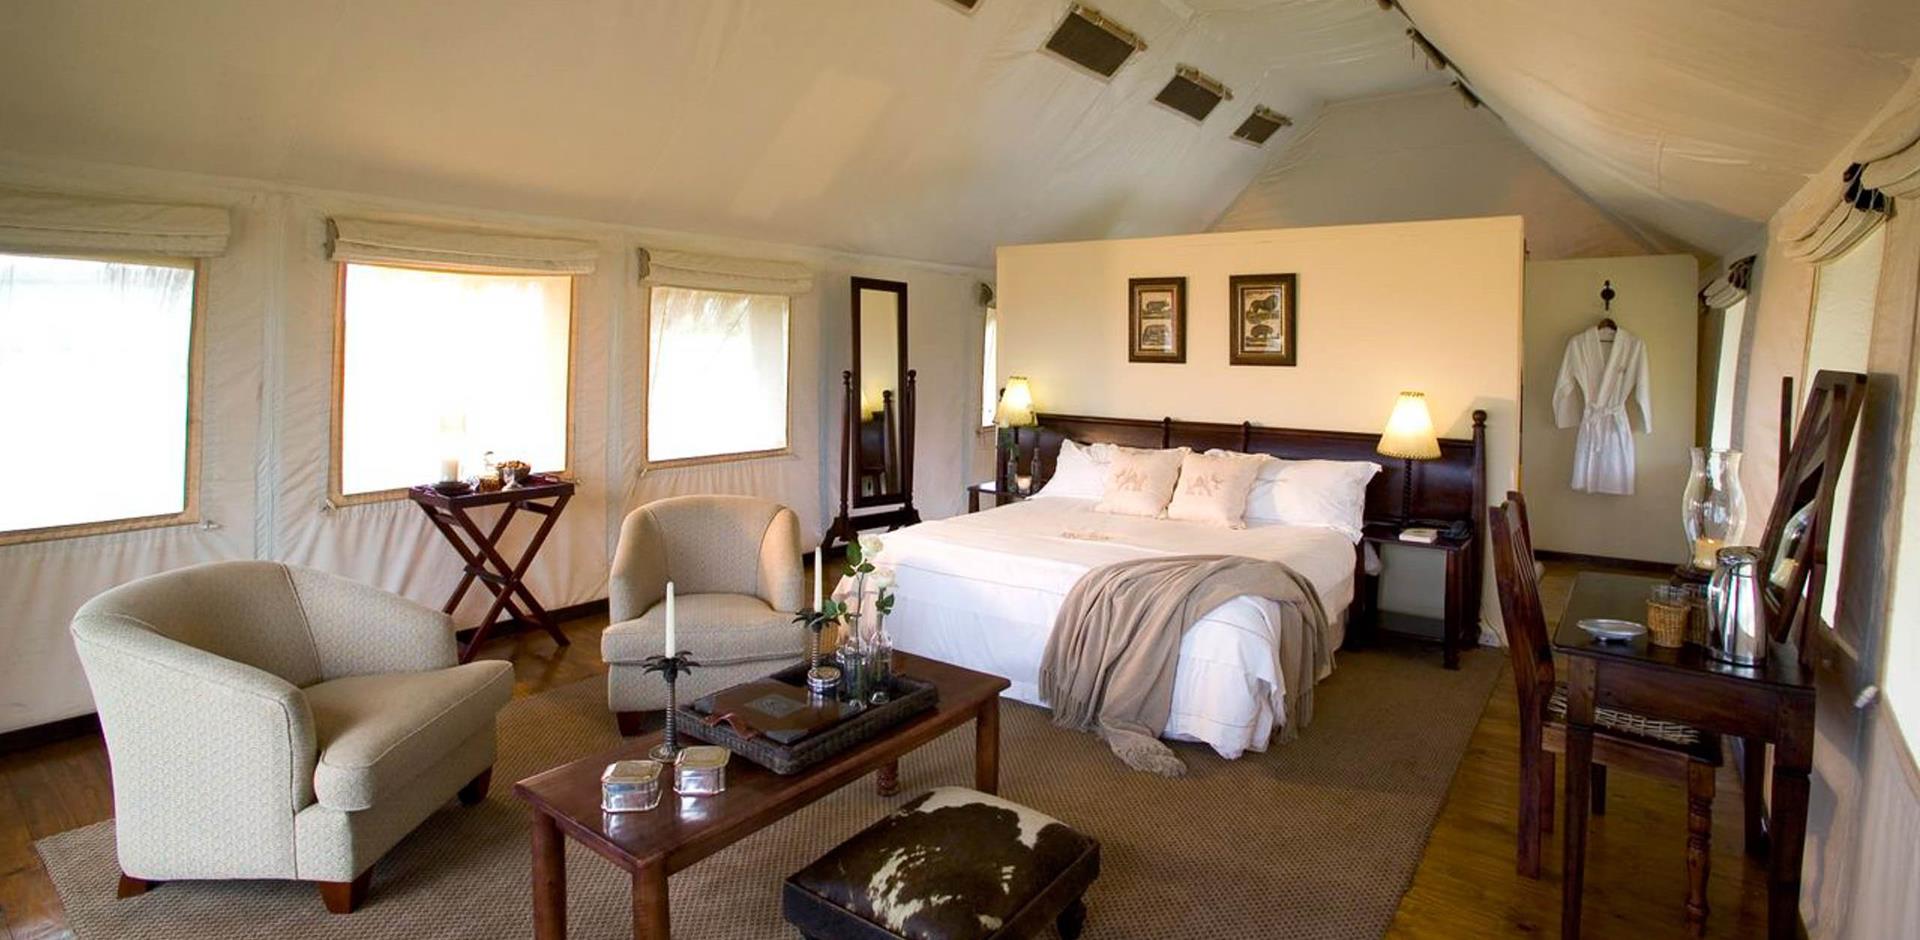 Bedroom, Gorah Elephant Camp, South Africa, A&K